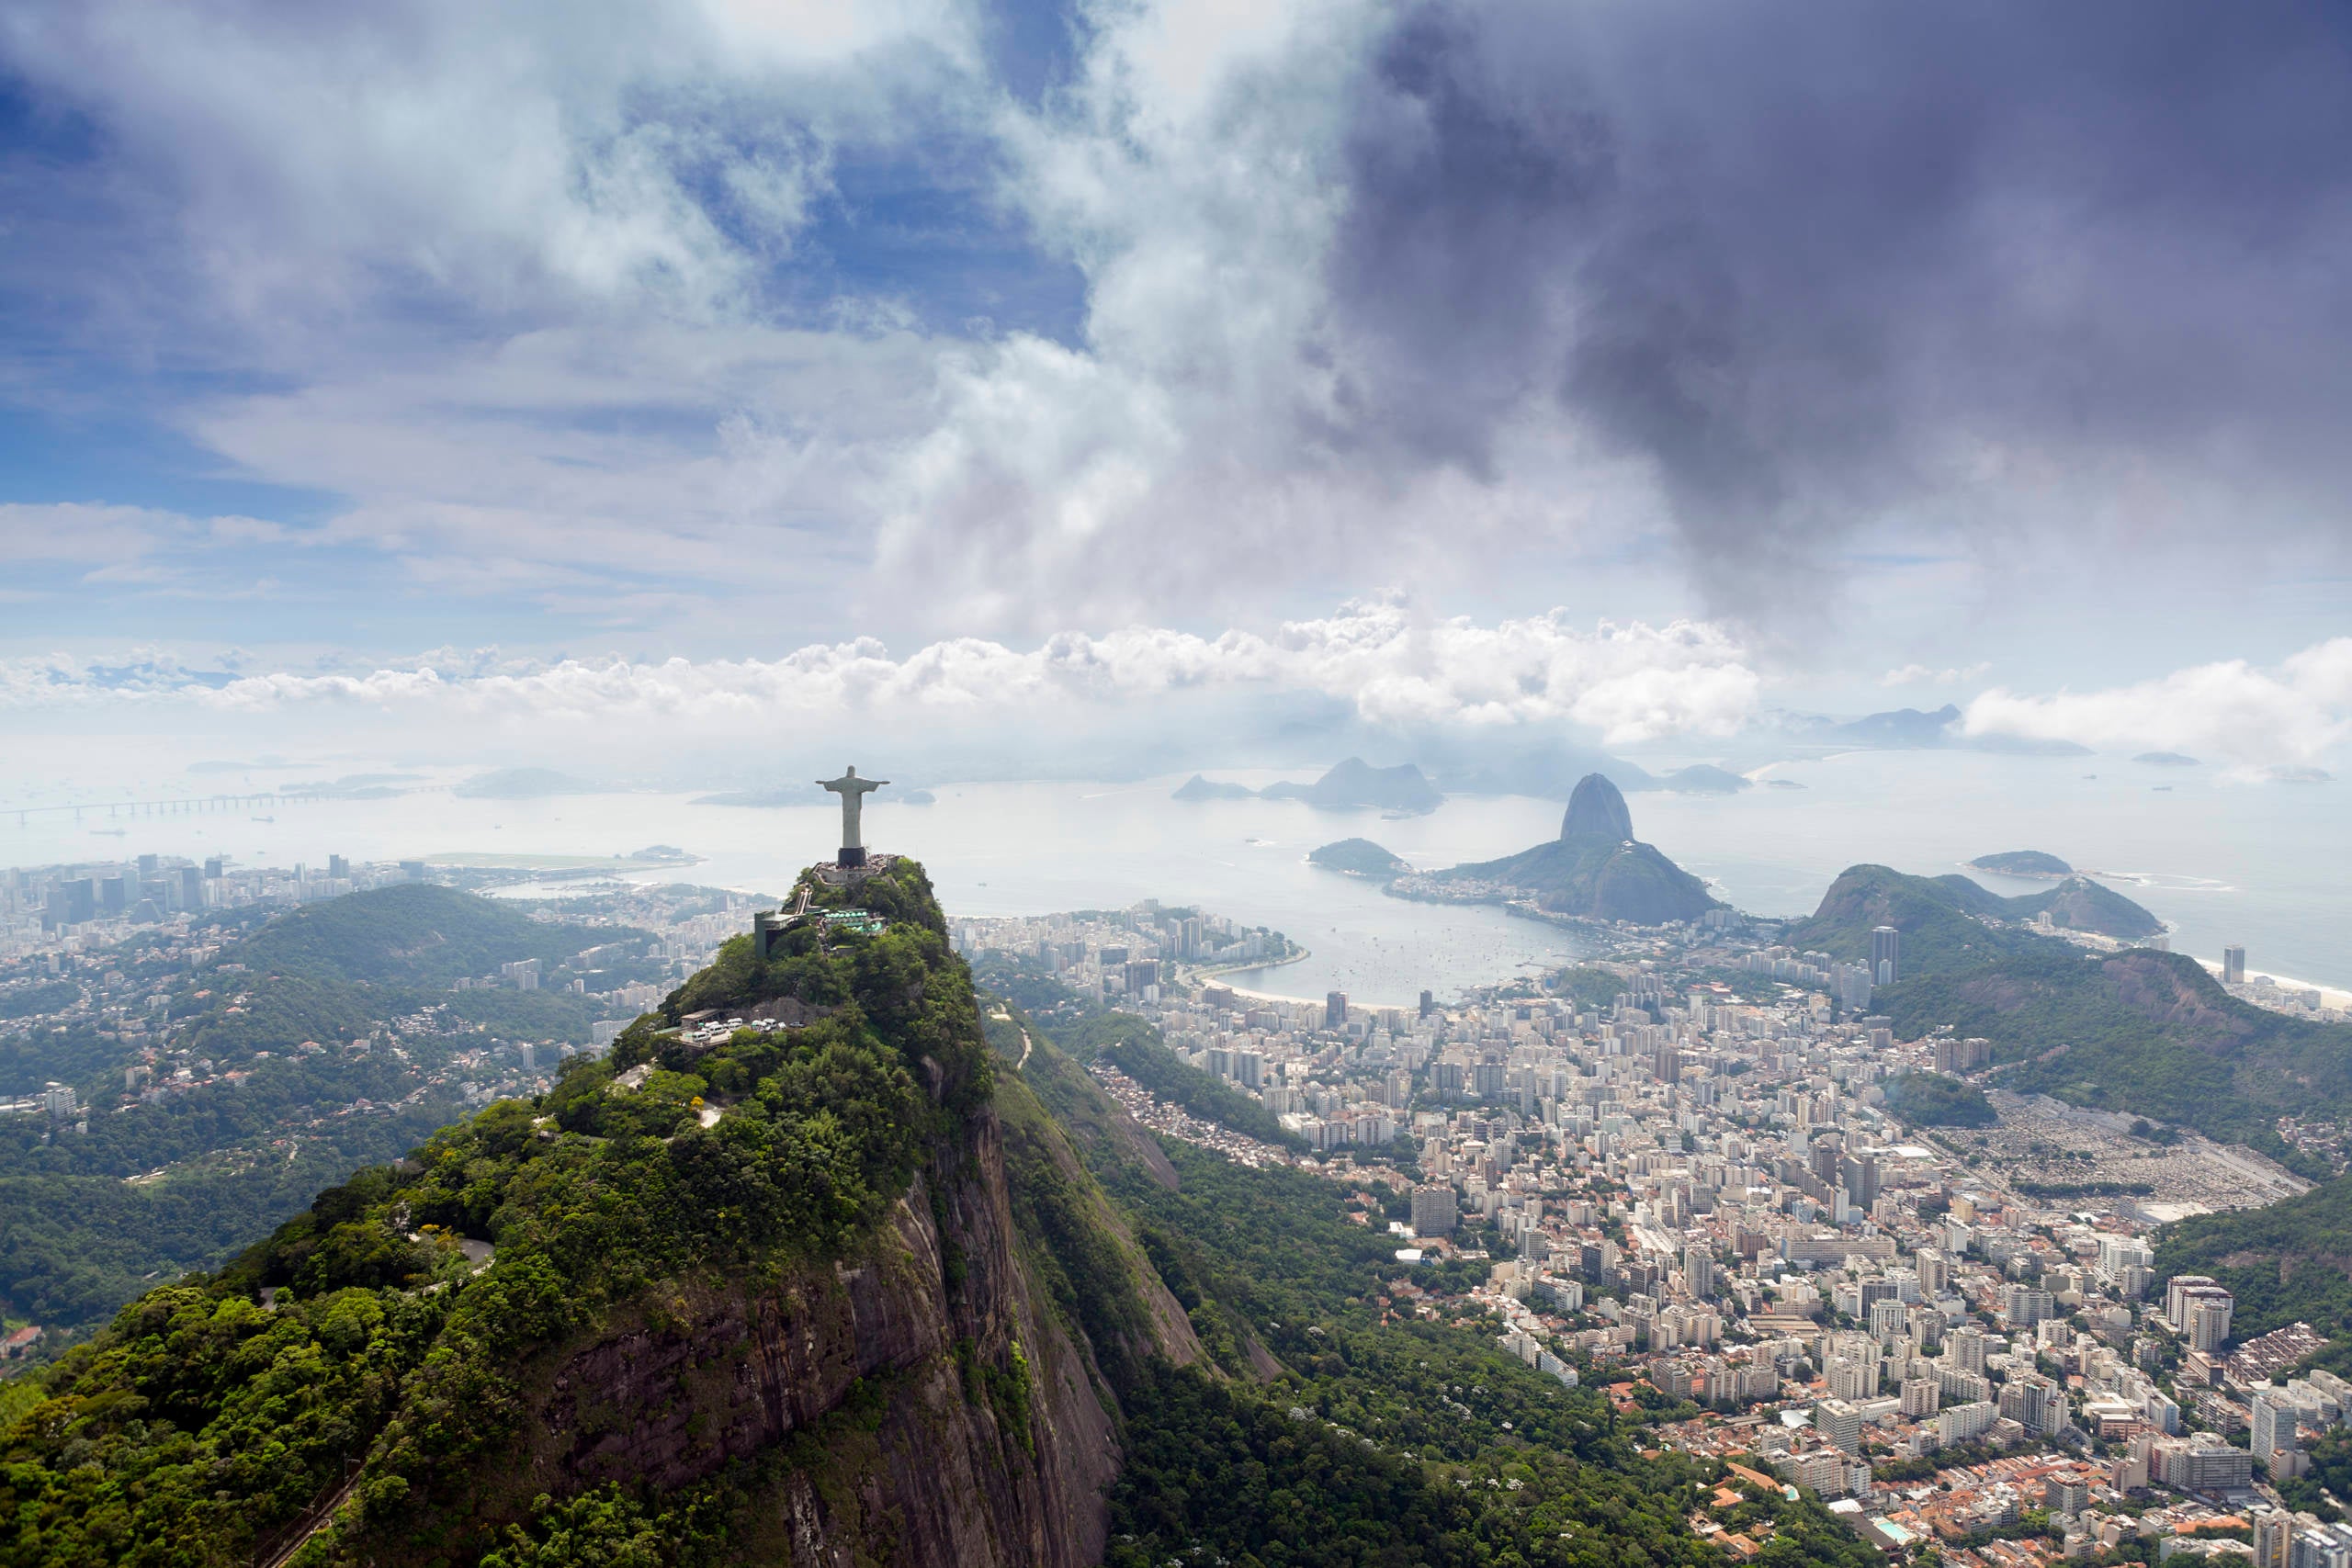 8 tips to stay safe while visiting Rio de Janeiro, Brazil